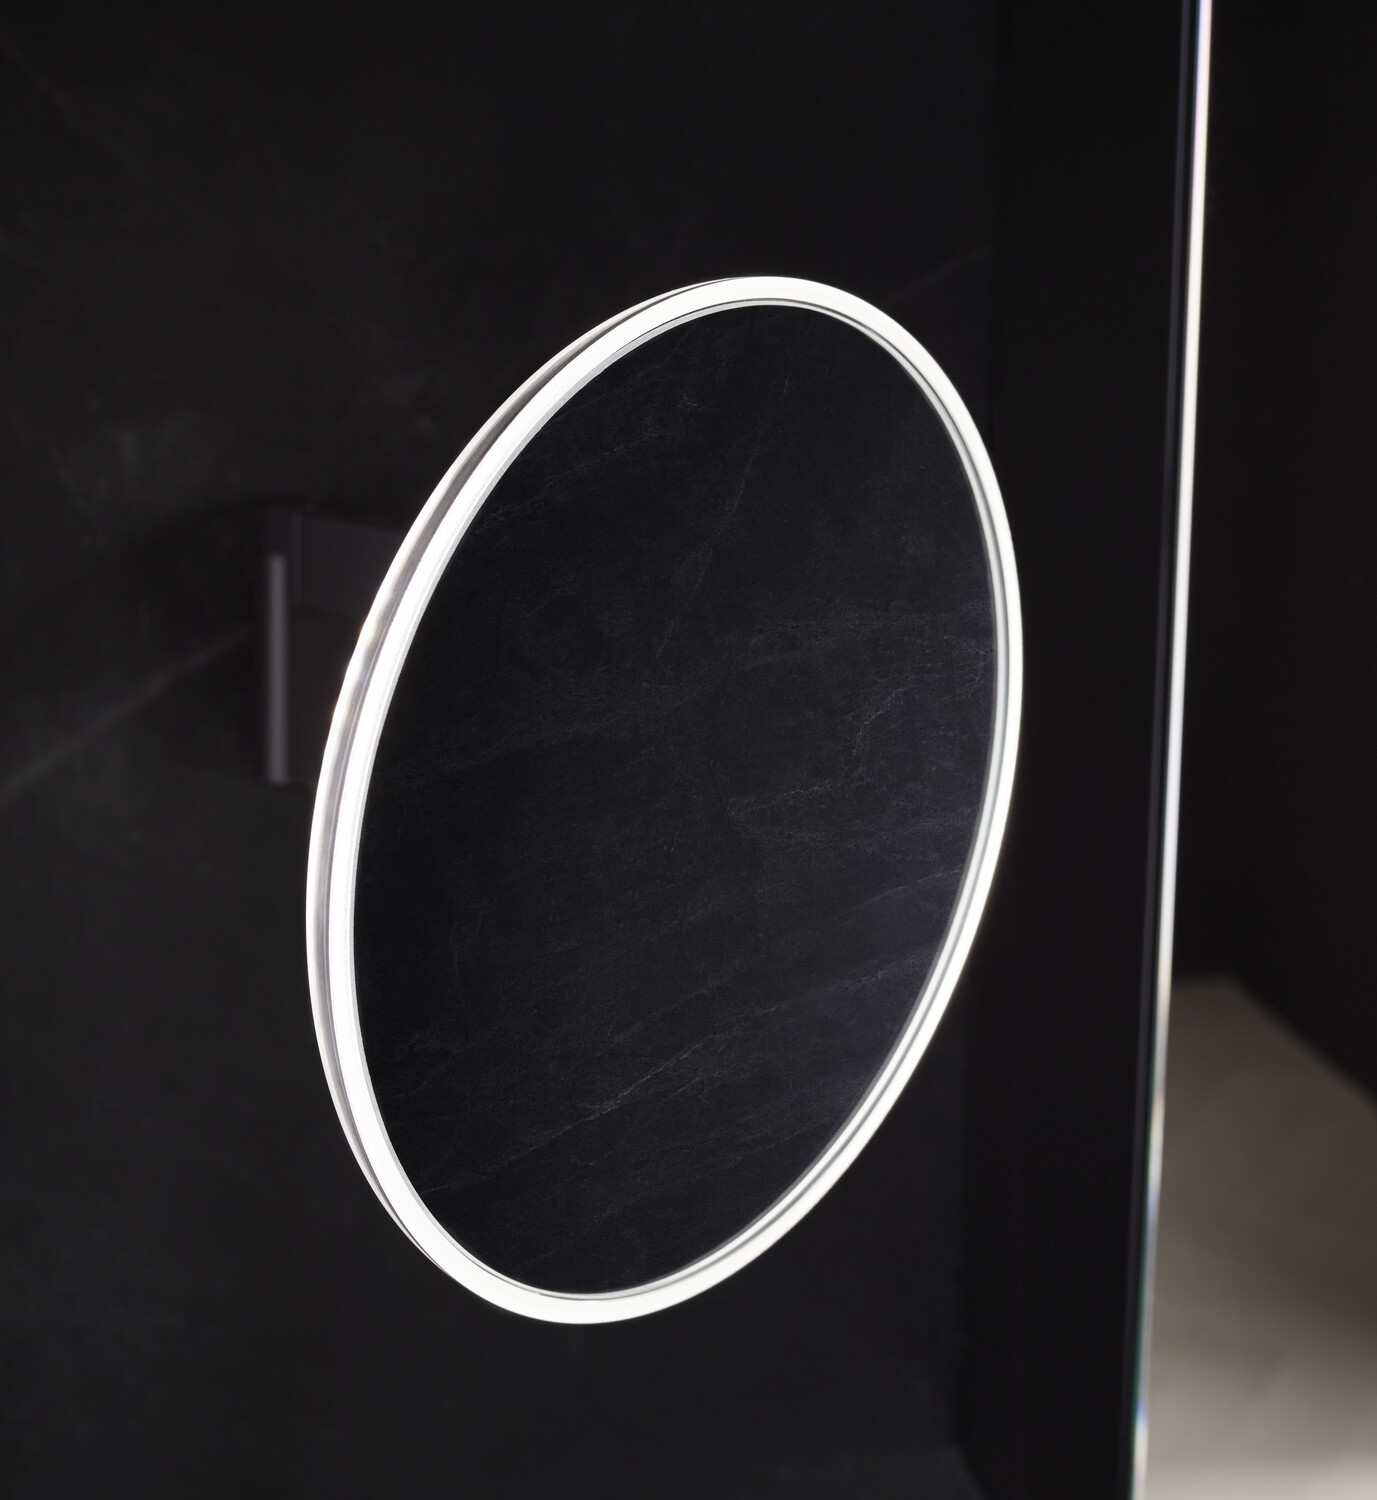 emco LED-Kosmetikspiegel „evo“ Rund in schwarz